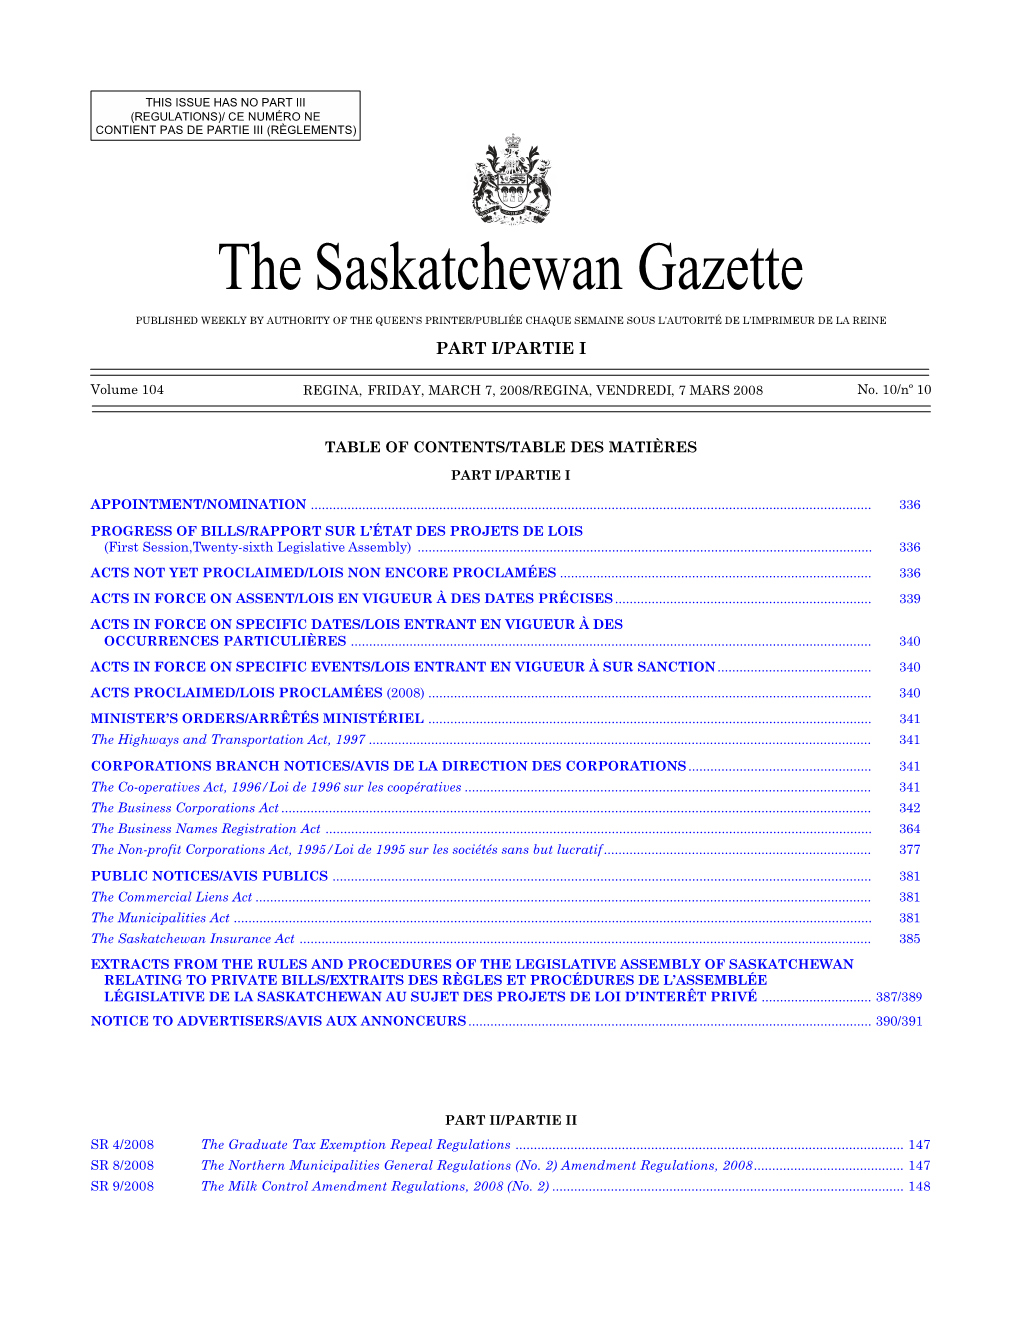 Sask Gazette, Part I, Mar 7, 2008